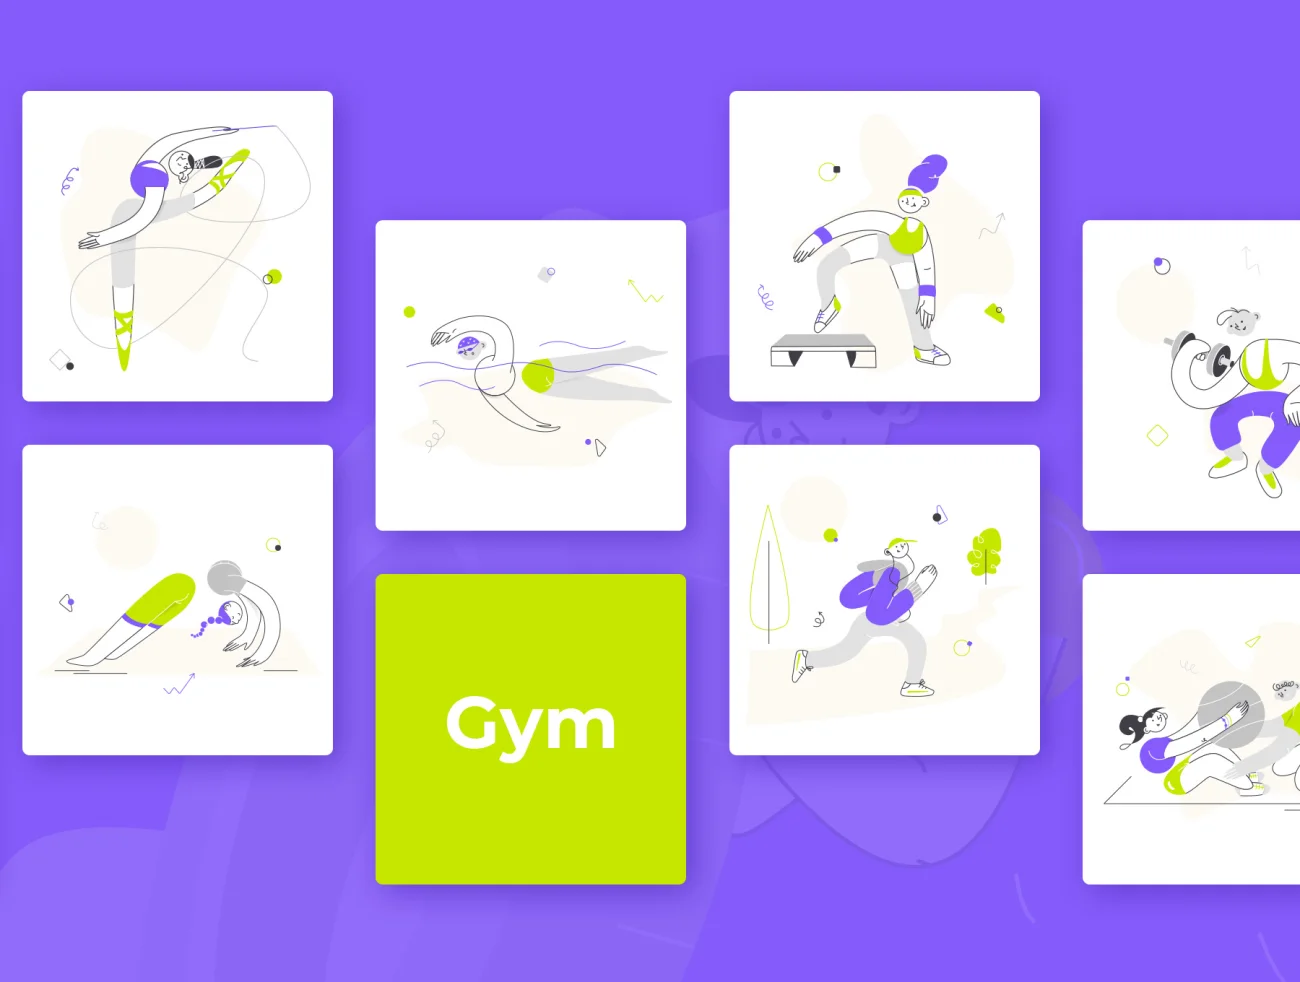 Yollo - Sport, Gym Illustration 15个体育运动健身房时尚趣味矢量插图-人物插画、场景插画、插画、插画风格、概念创意、线条手绘、趣味漫画、运动健身-到位啦UI